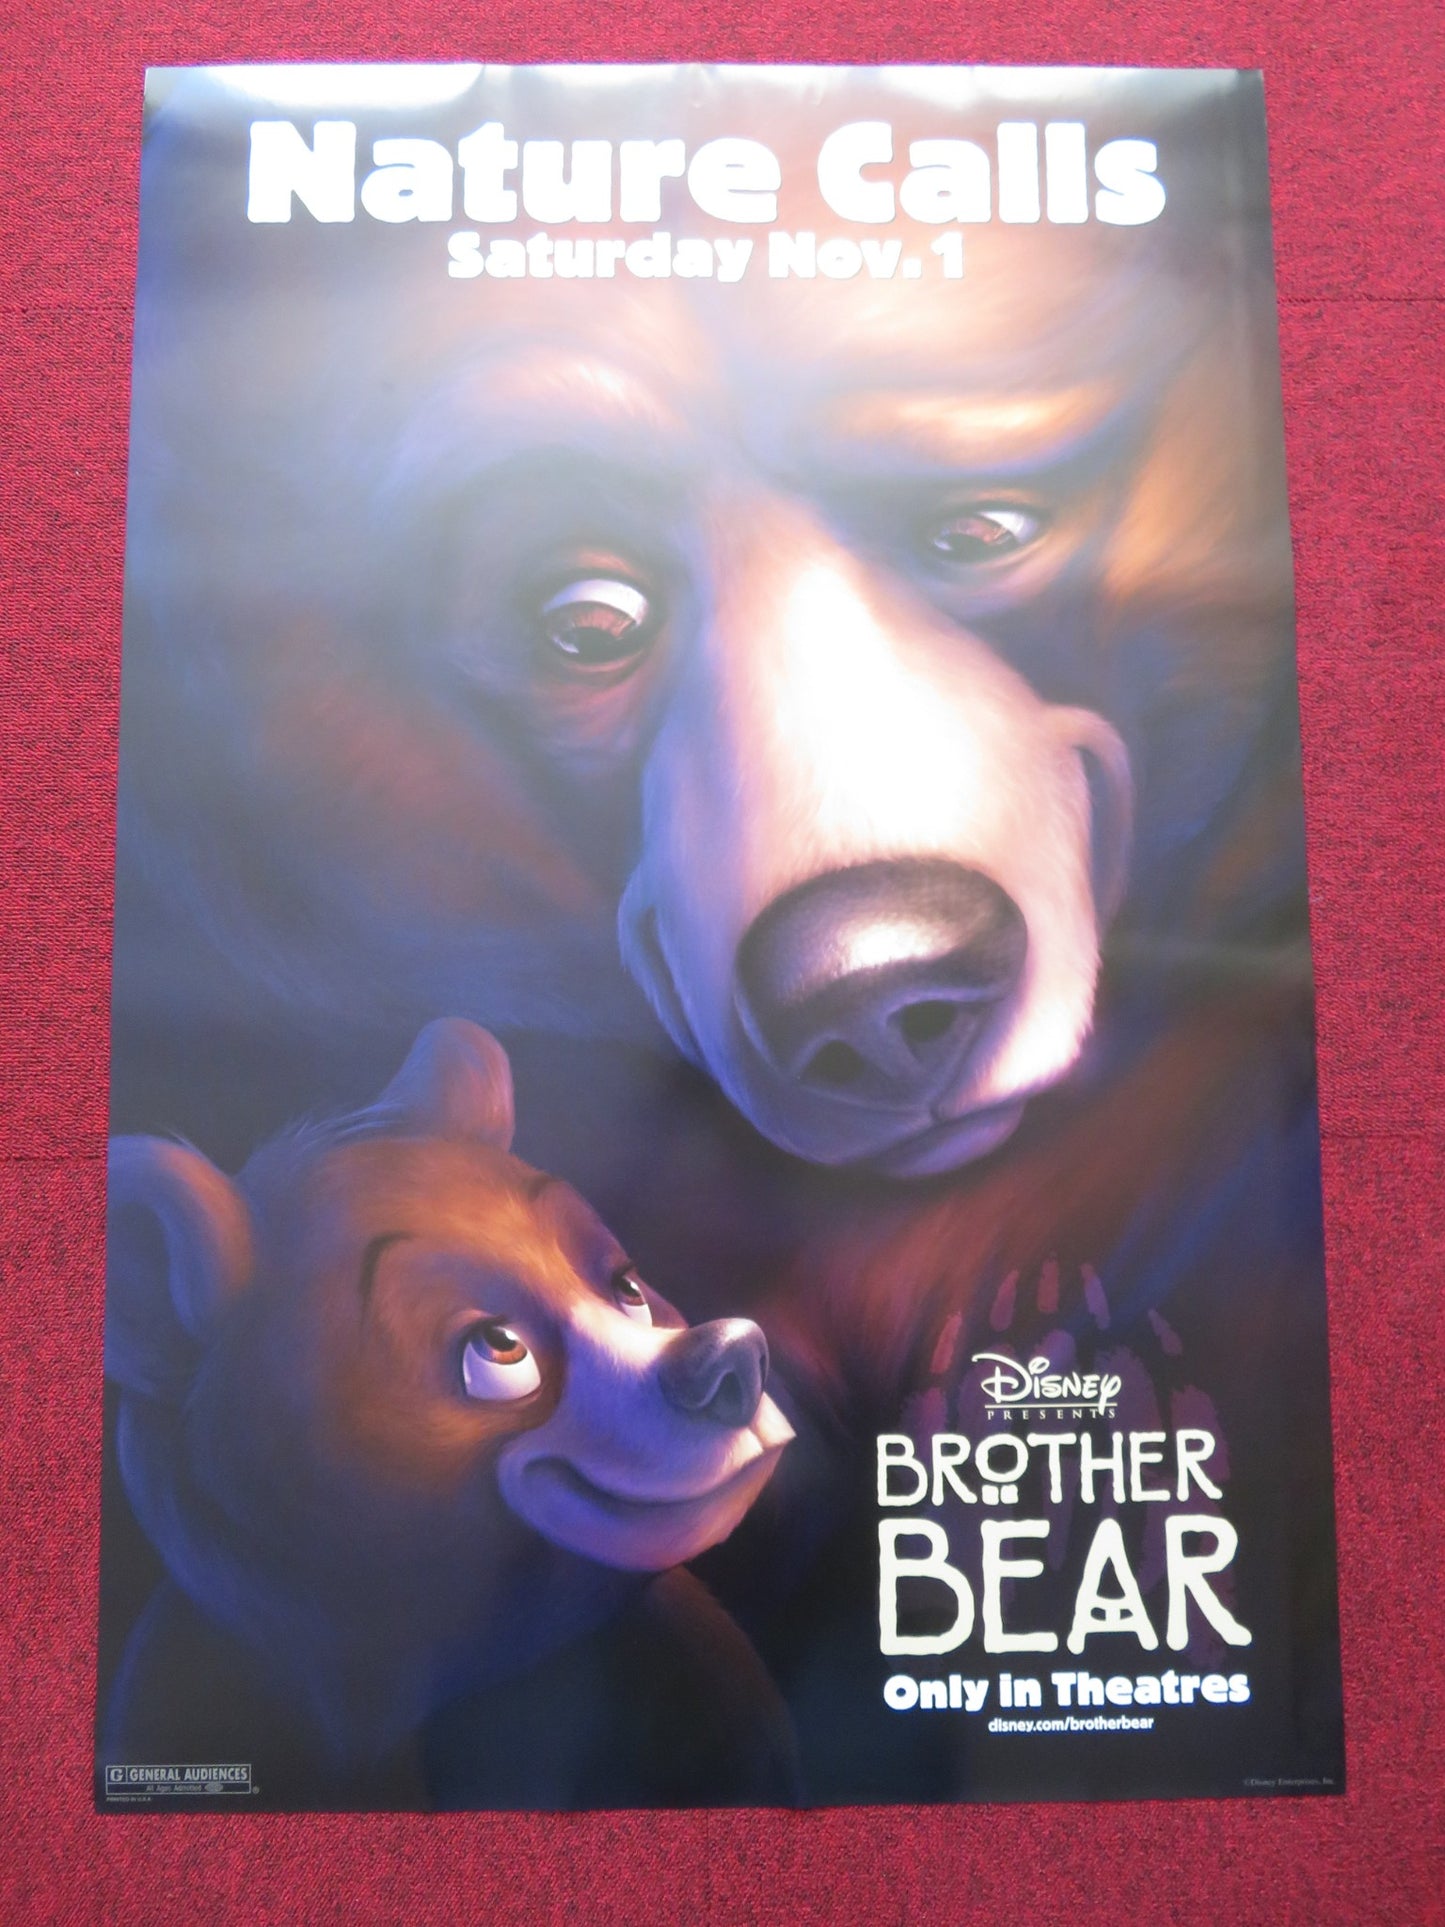 The Darjeeling Limited Original Movie Poster 27X40 DS 2007 U.S.